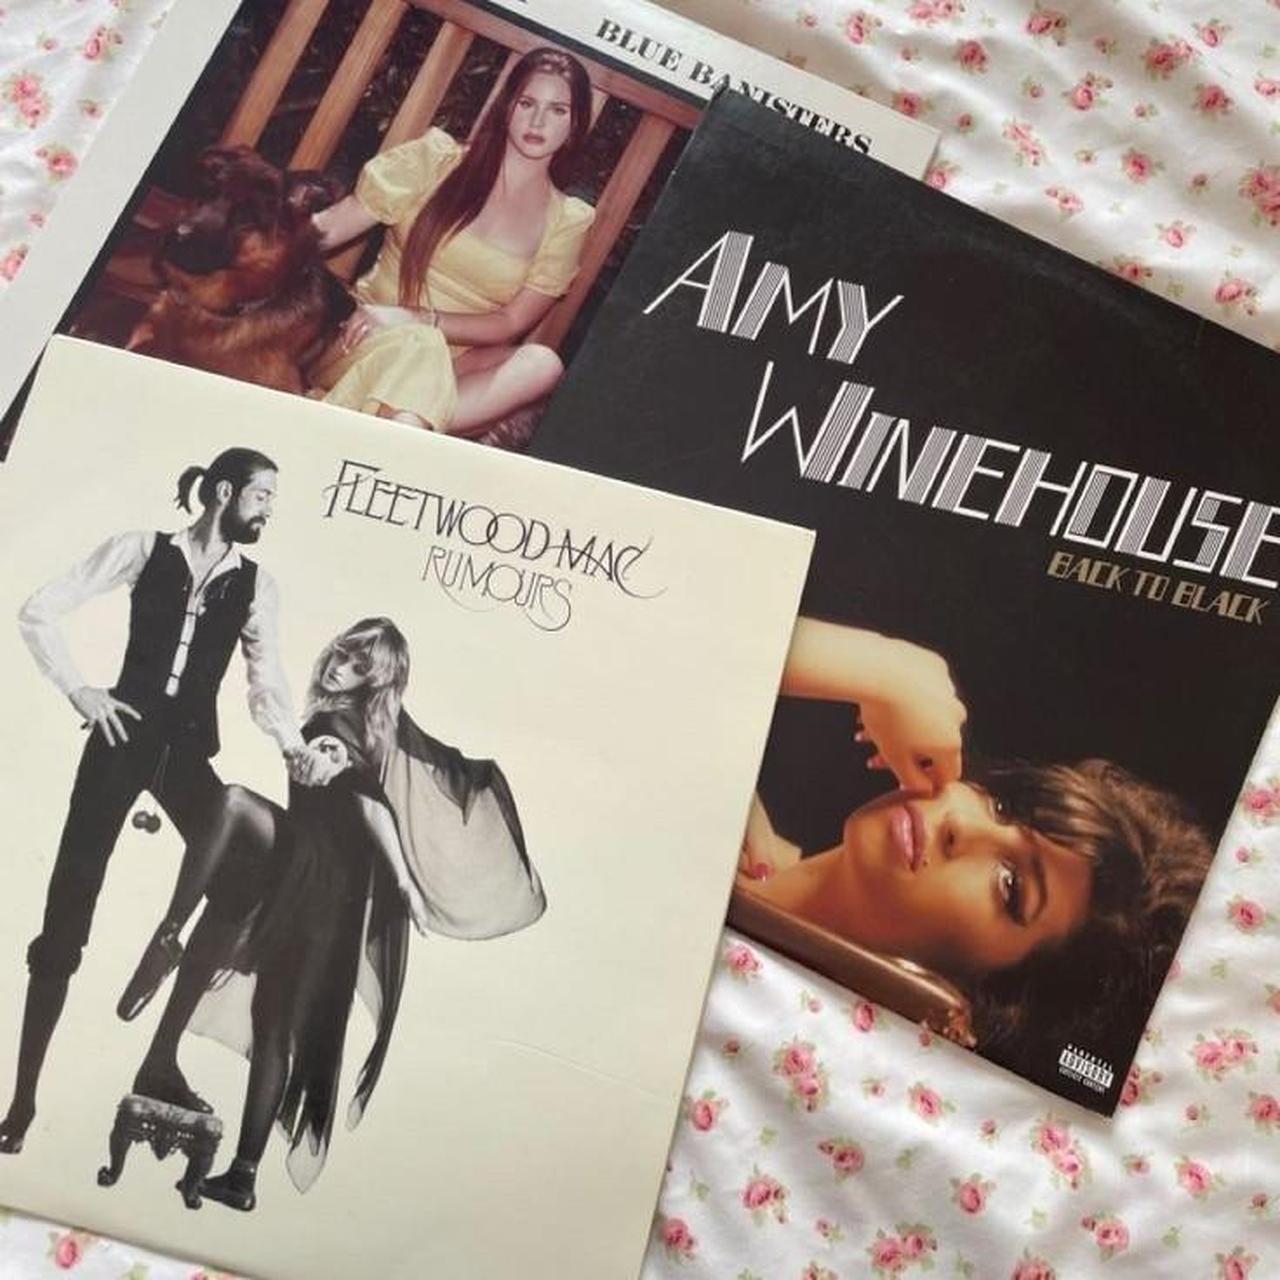 Amy Winehouse – Black Is Back (Blue Vinyl)